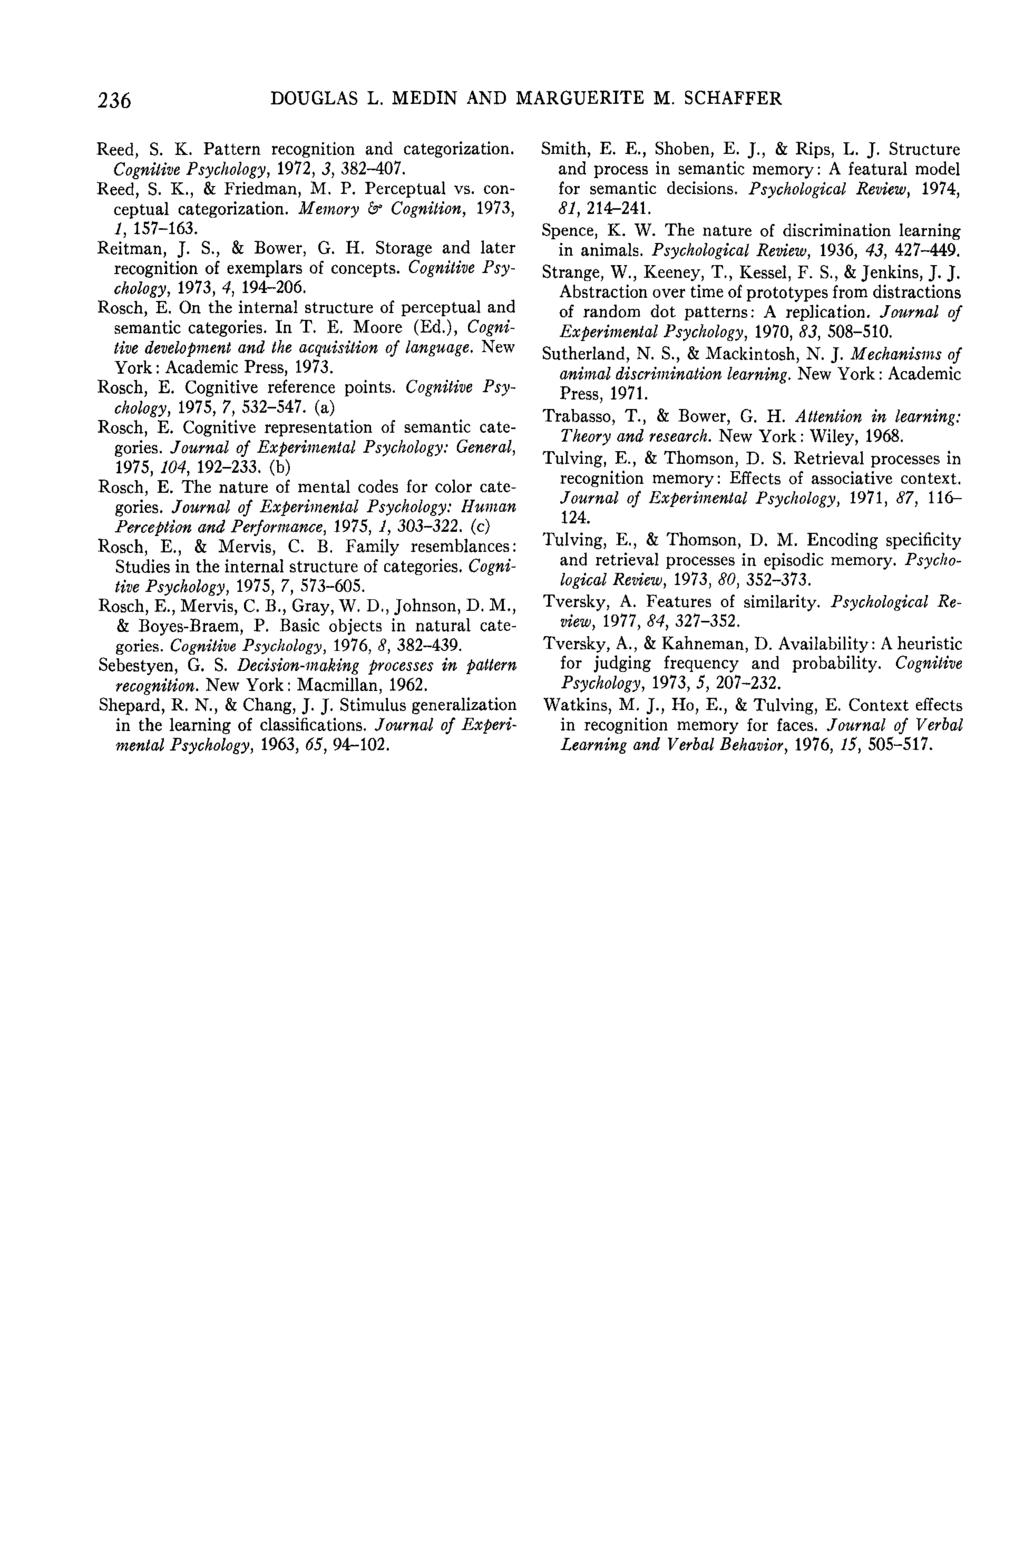 36 DOUGLAS L. MEDIN AND MARGUERITE M. SCHAFFER Reed, S. K. Pattern recognition and categorization. Cognitive Psychology, 9, 3, 38-. Reed, S. K., & Friedman, M. P. Perceptual vs.